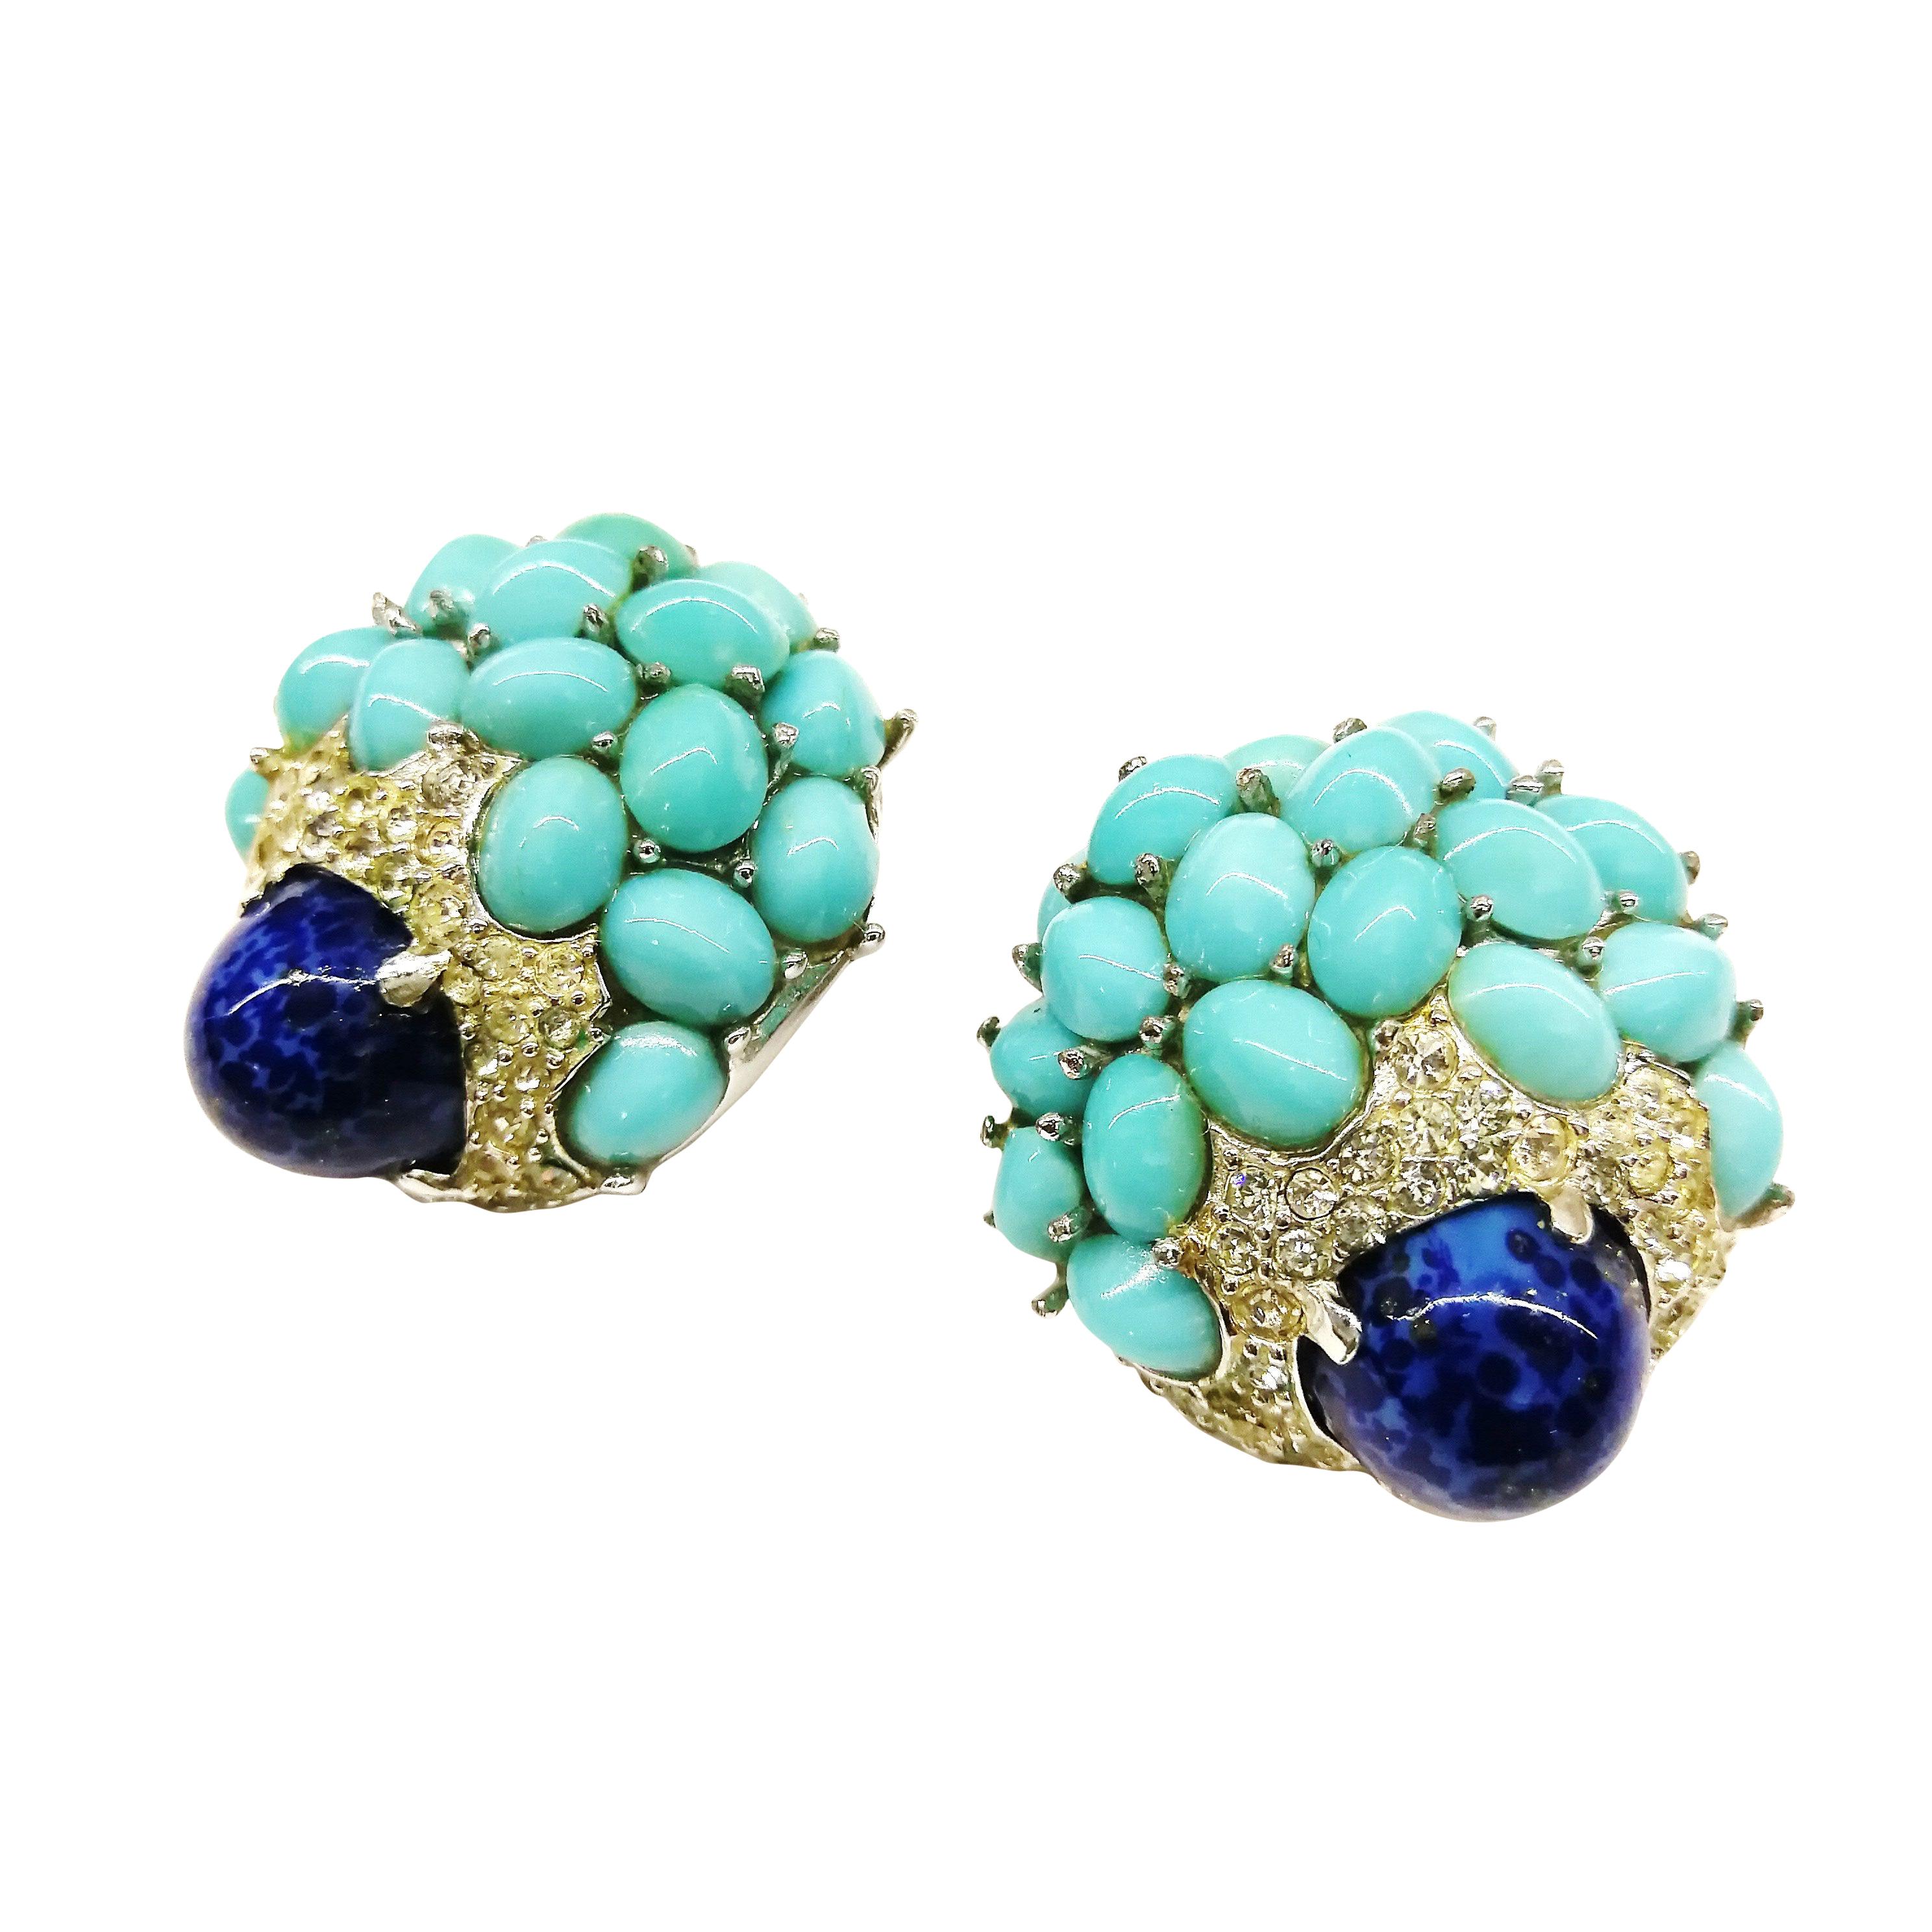 Lapis, turquoise cabochon, clear paste 'cluster' earrings, Marcel Boucher, 1960s